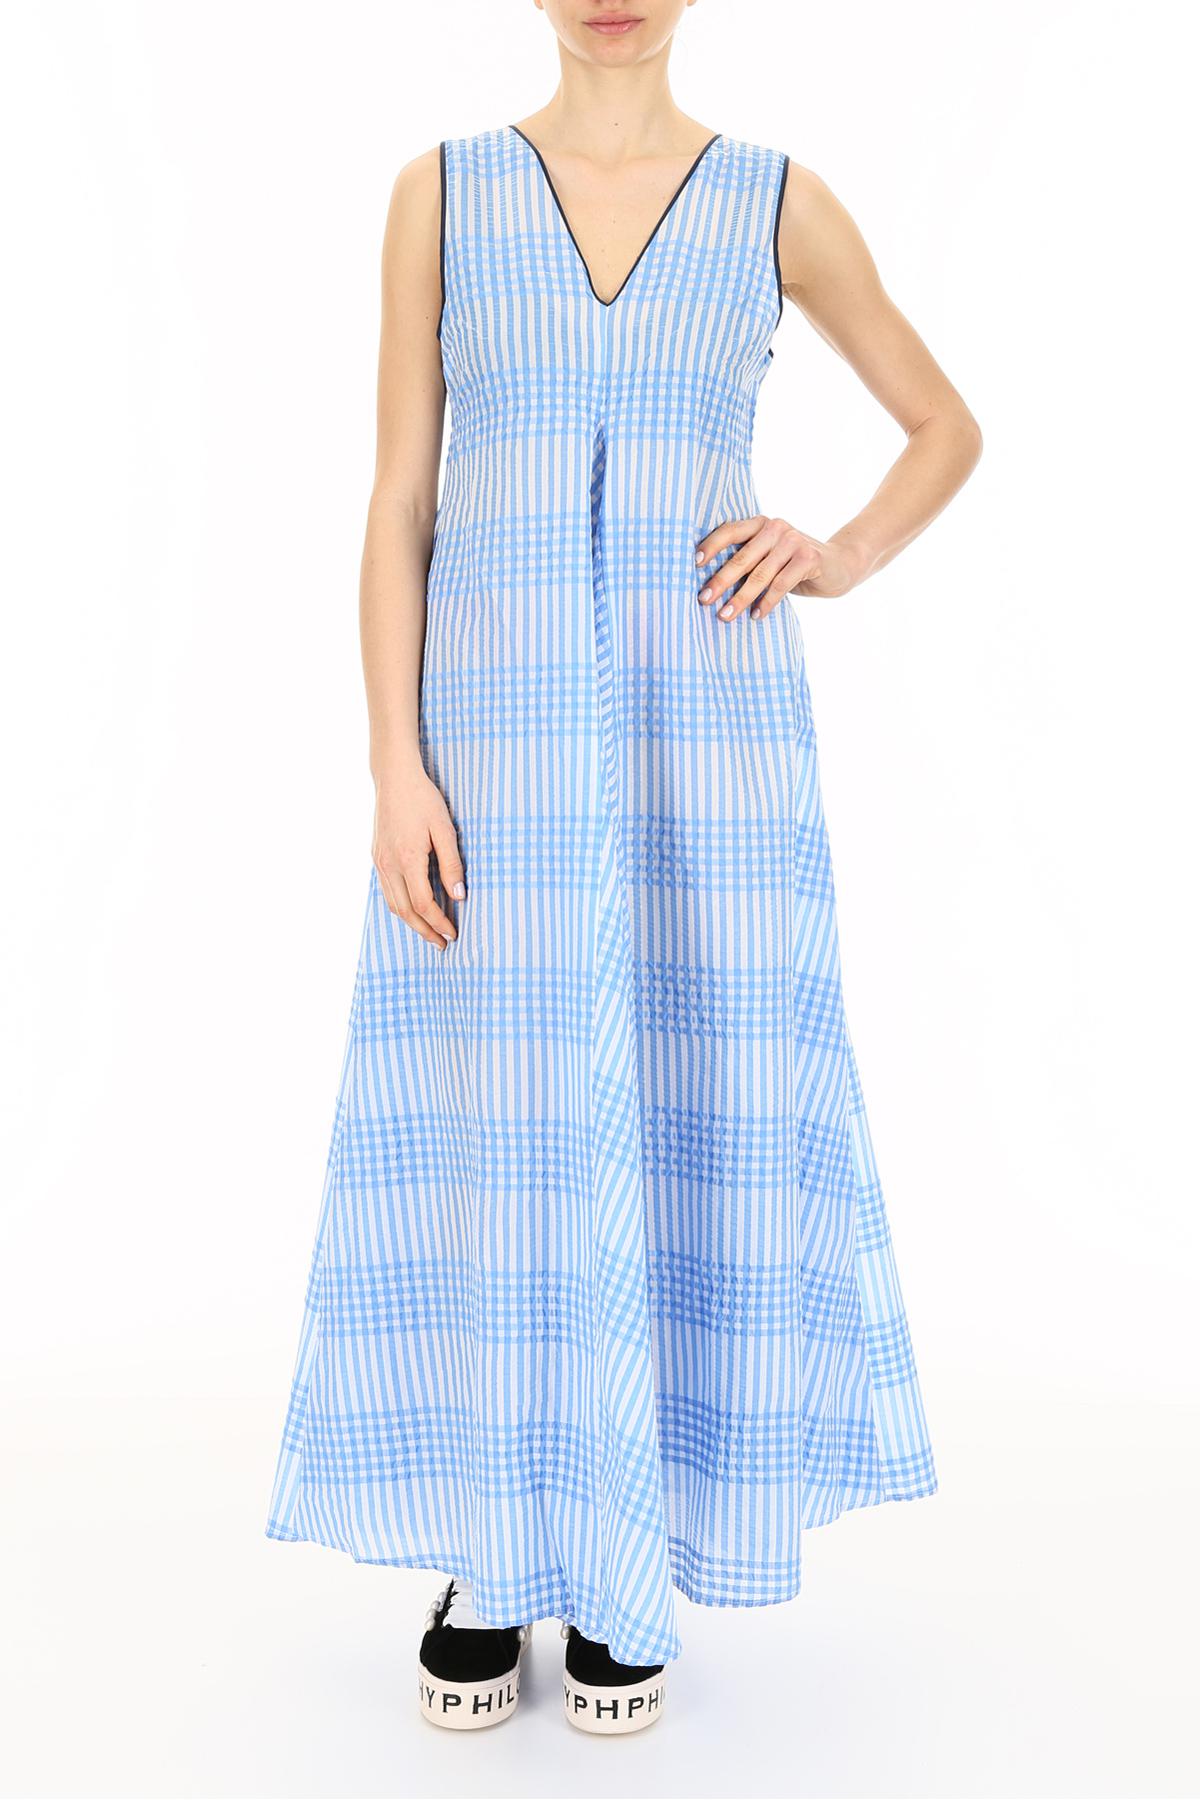 Ganni Cotton Charron Maxi Dress in Blue - Lyst